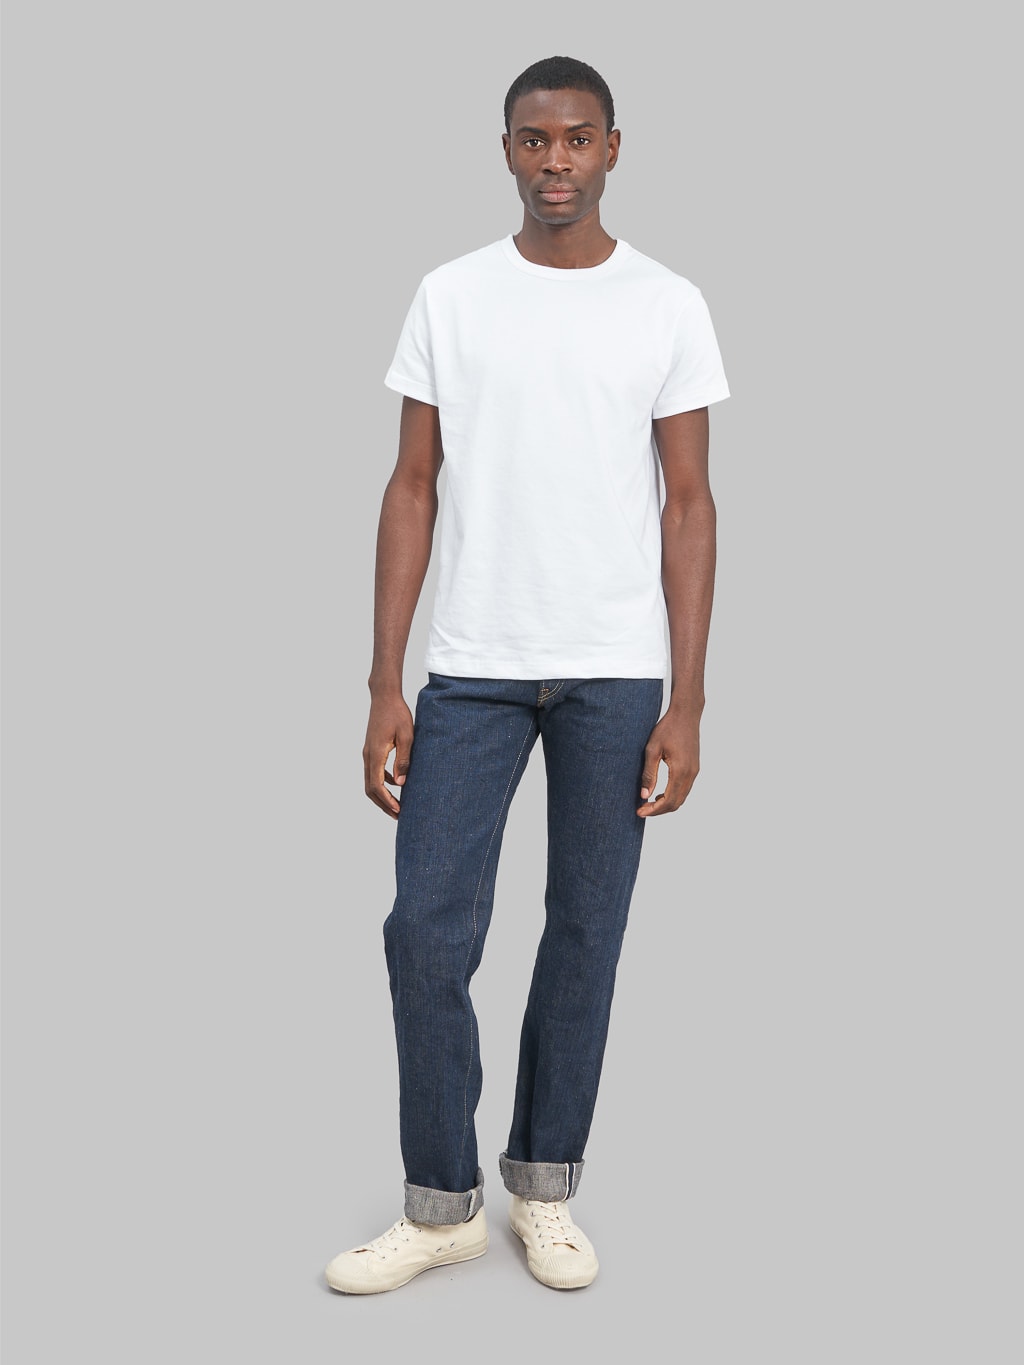 Oni denim kiwami indigo regular selvedge jeans model front fit